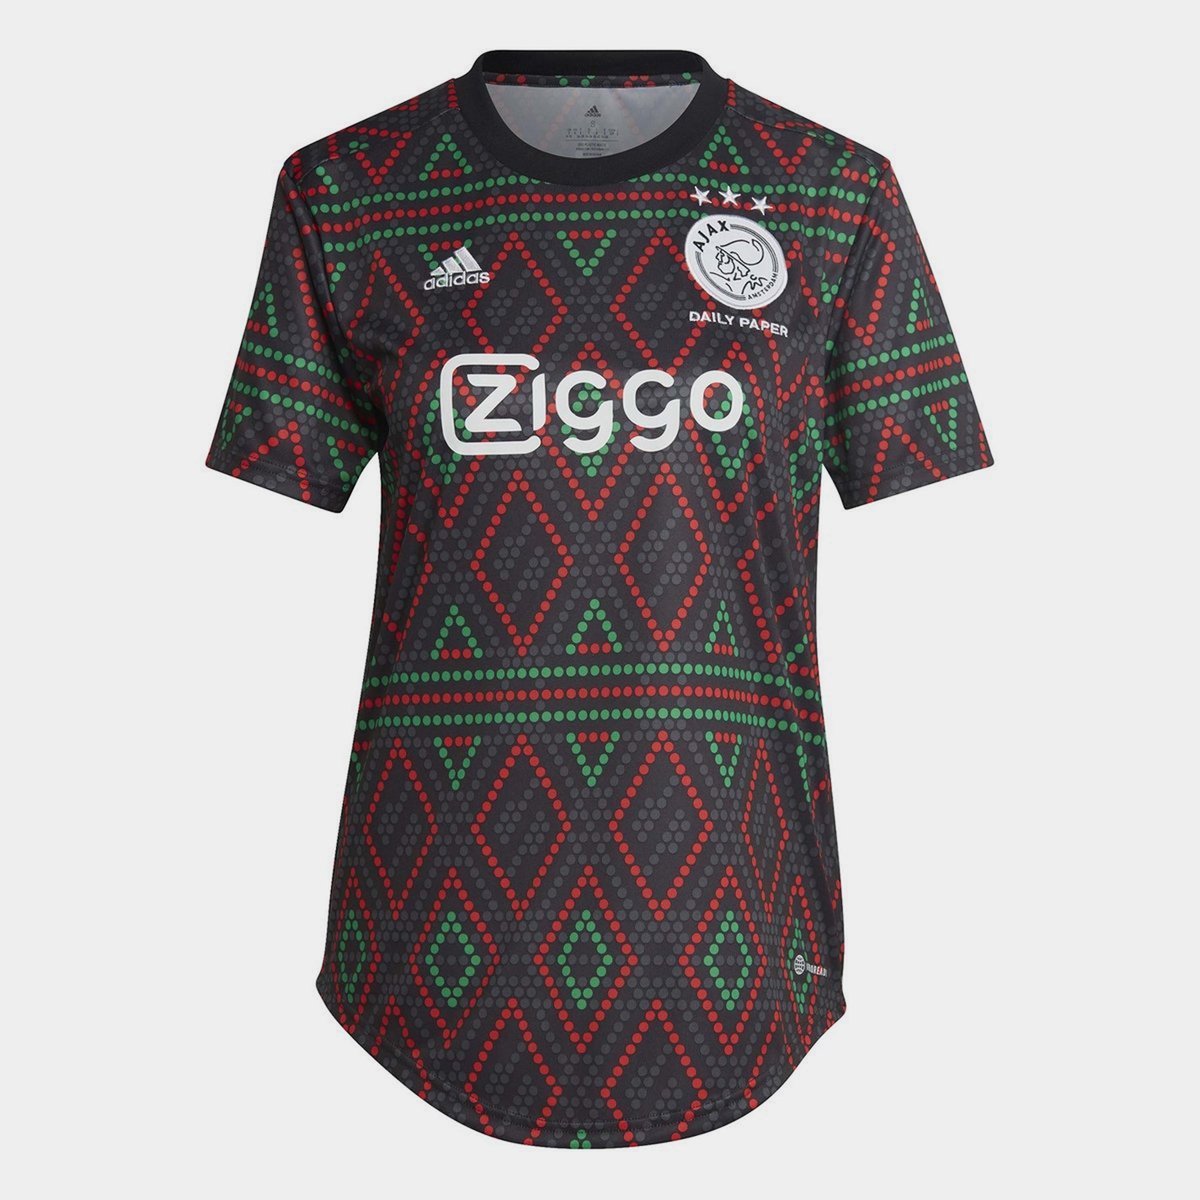 Ajax Football Shirts and Kits, Home, Away, Third